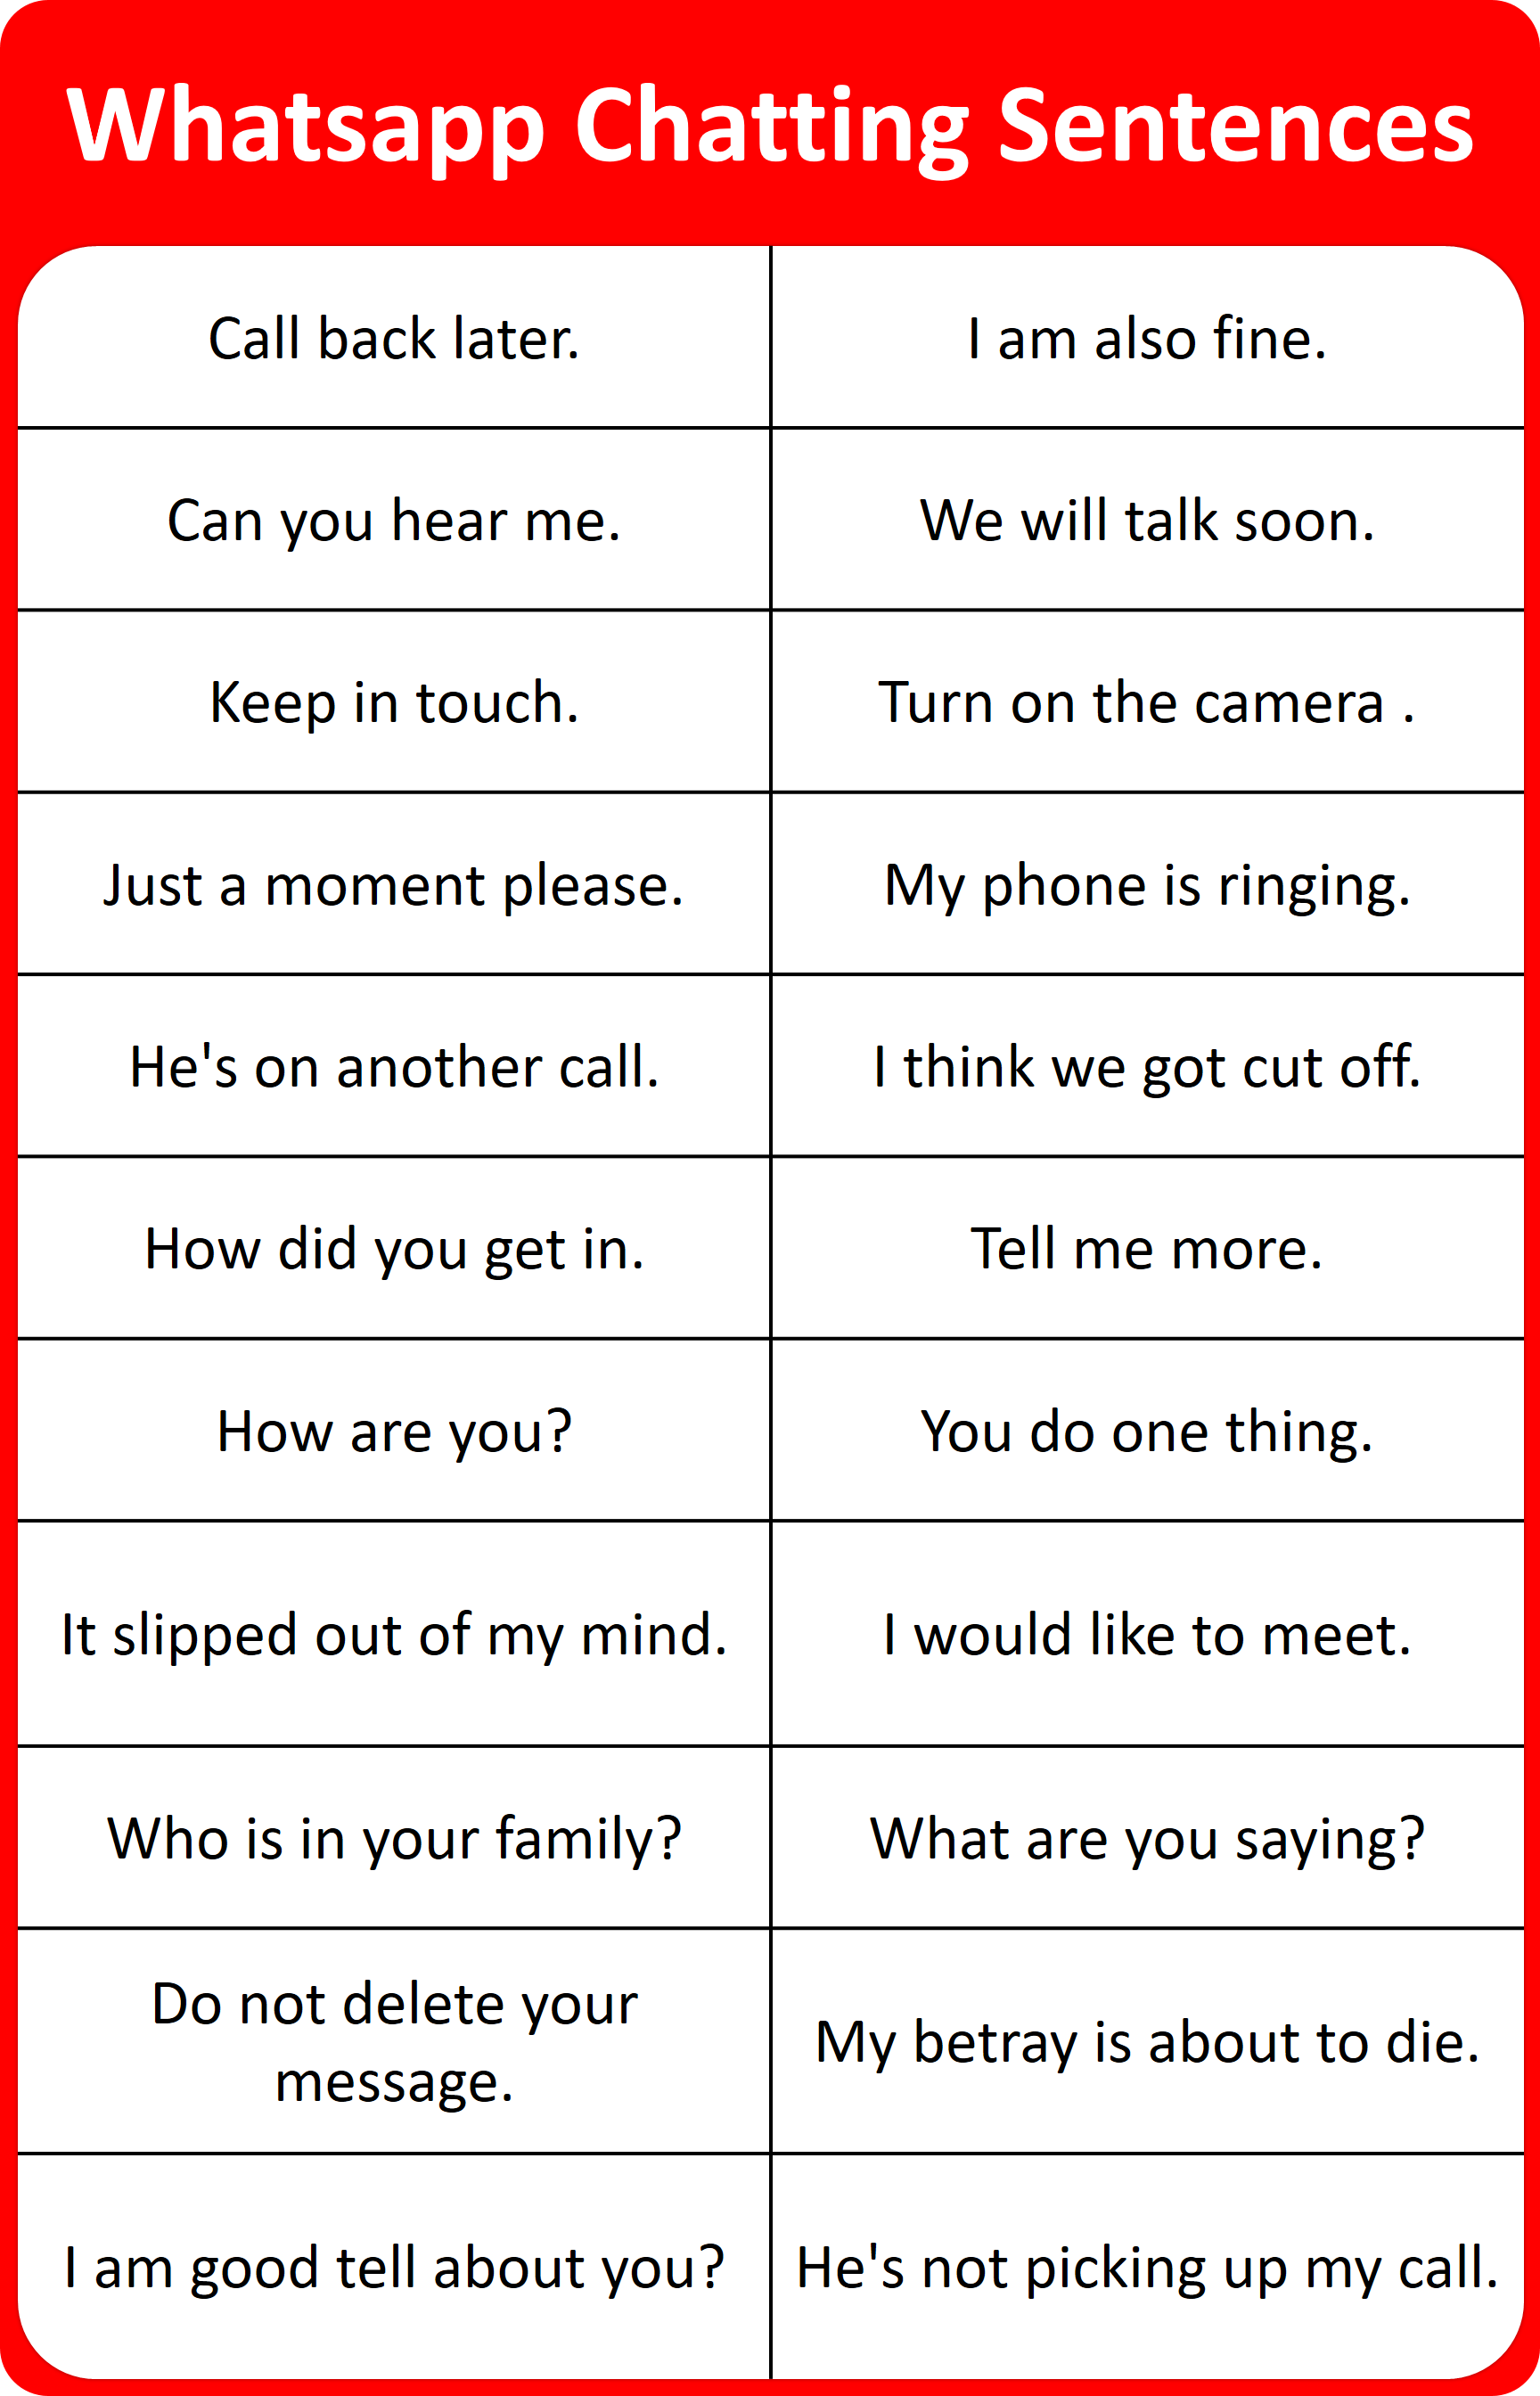 English Sentences for chatting on Whatsapp